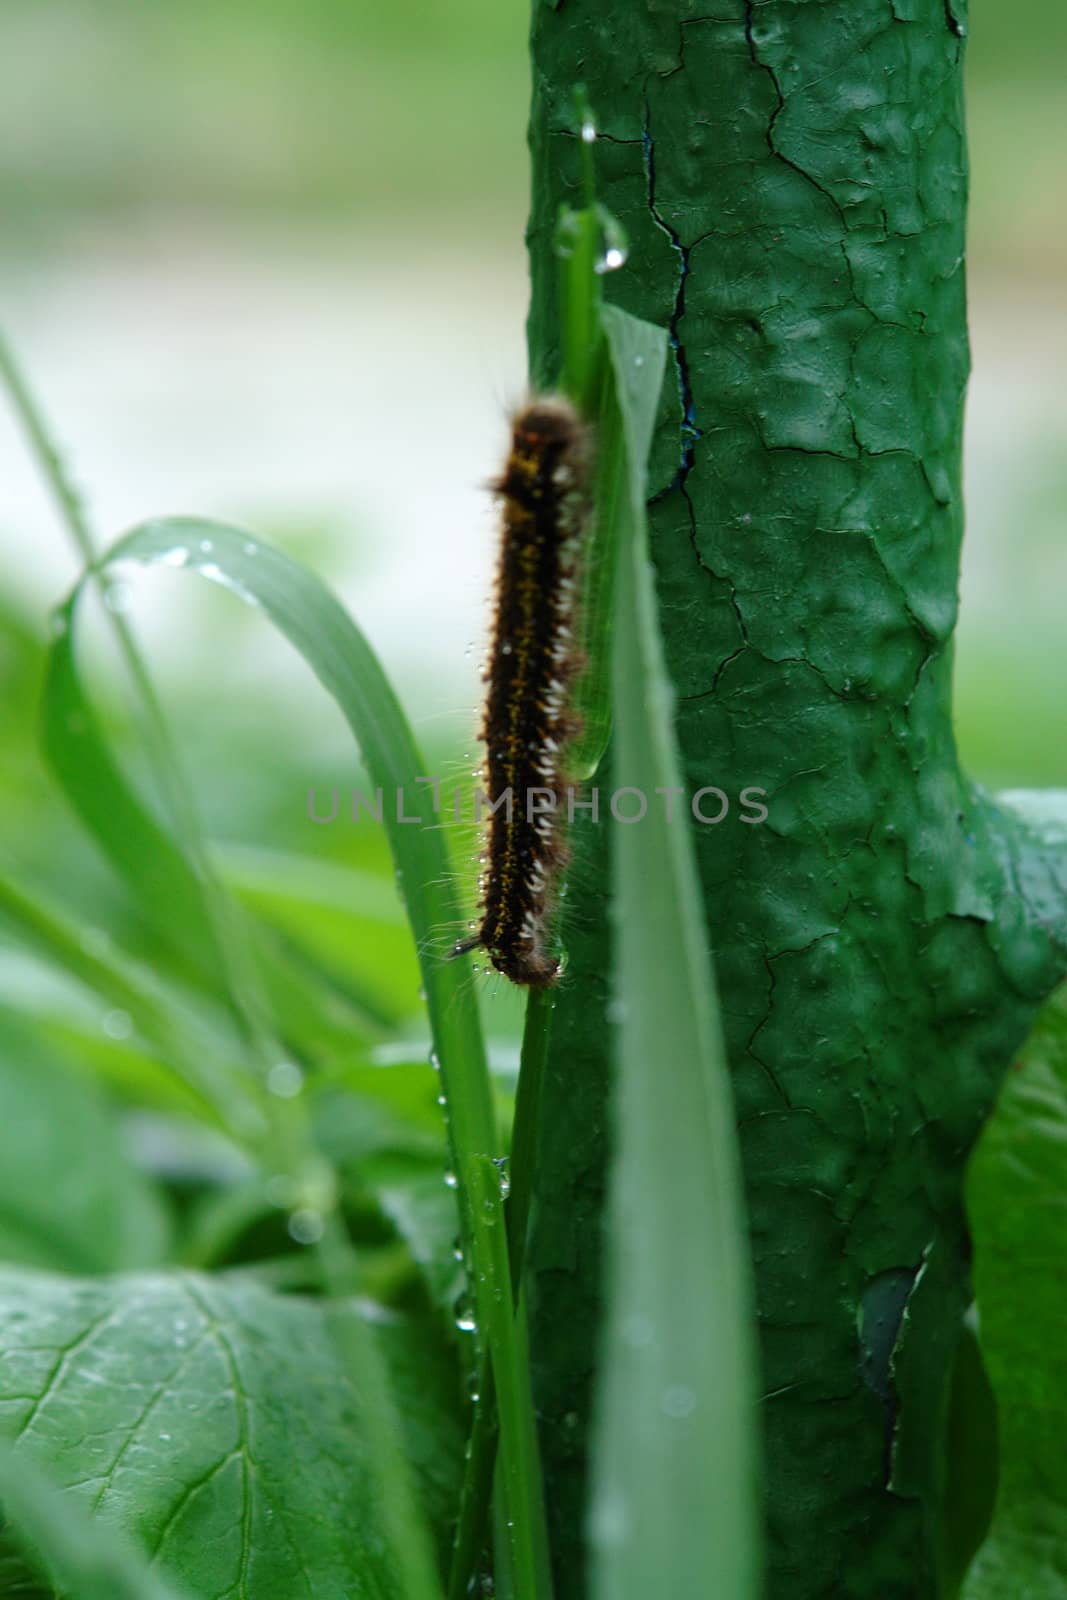 The brown caterpillar creeps on a green grass